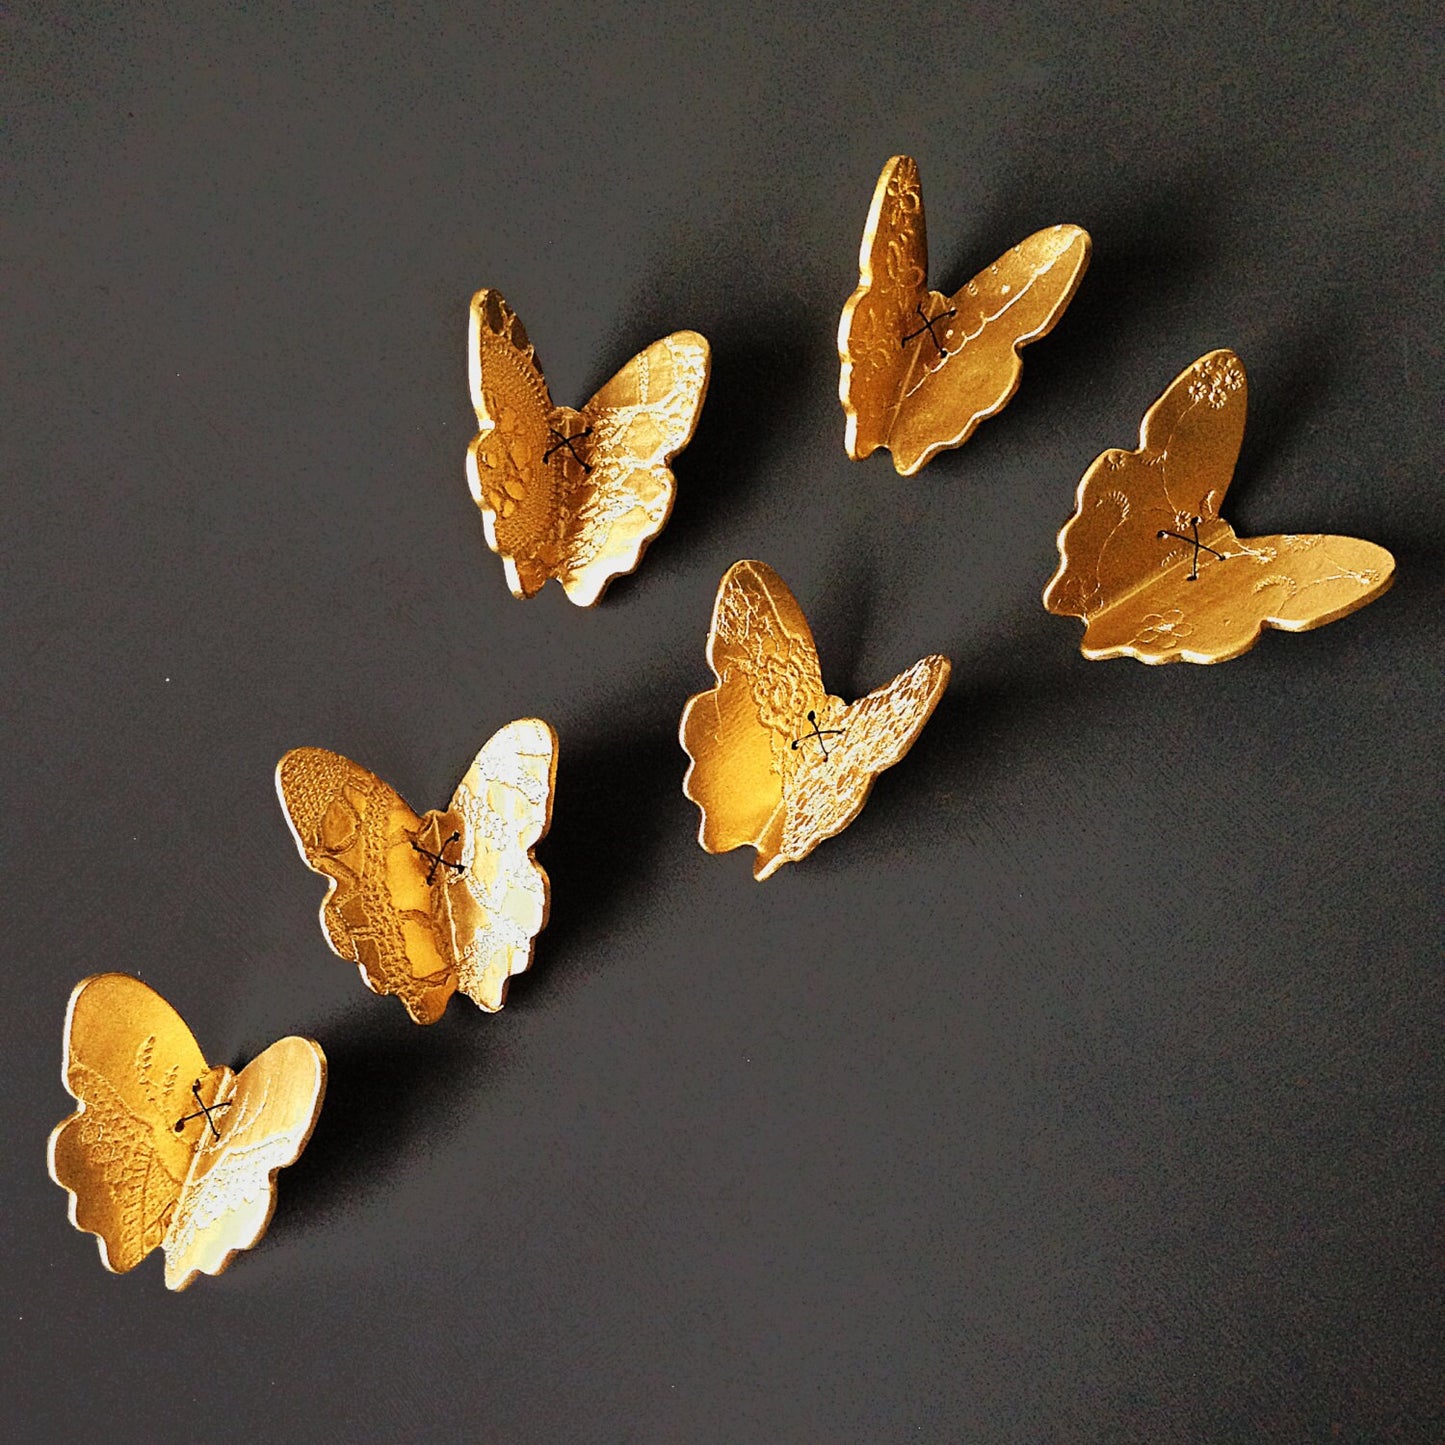 3D butterfly wall art Home decor gift  Original gold porcelain ceramic sculptures butterflies Lace detail & blackened copper wire